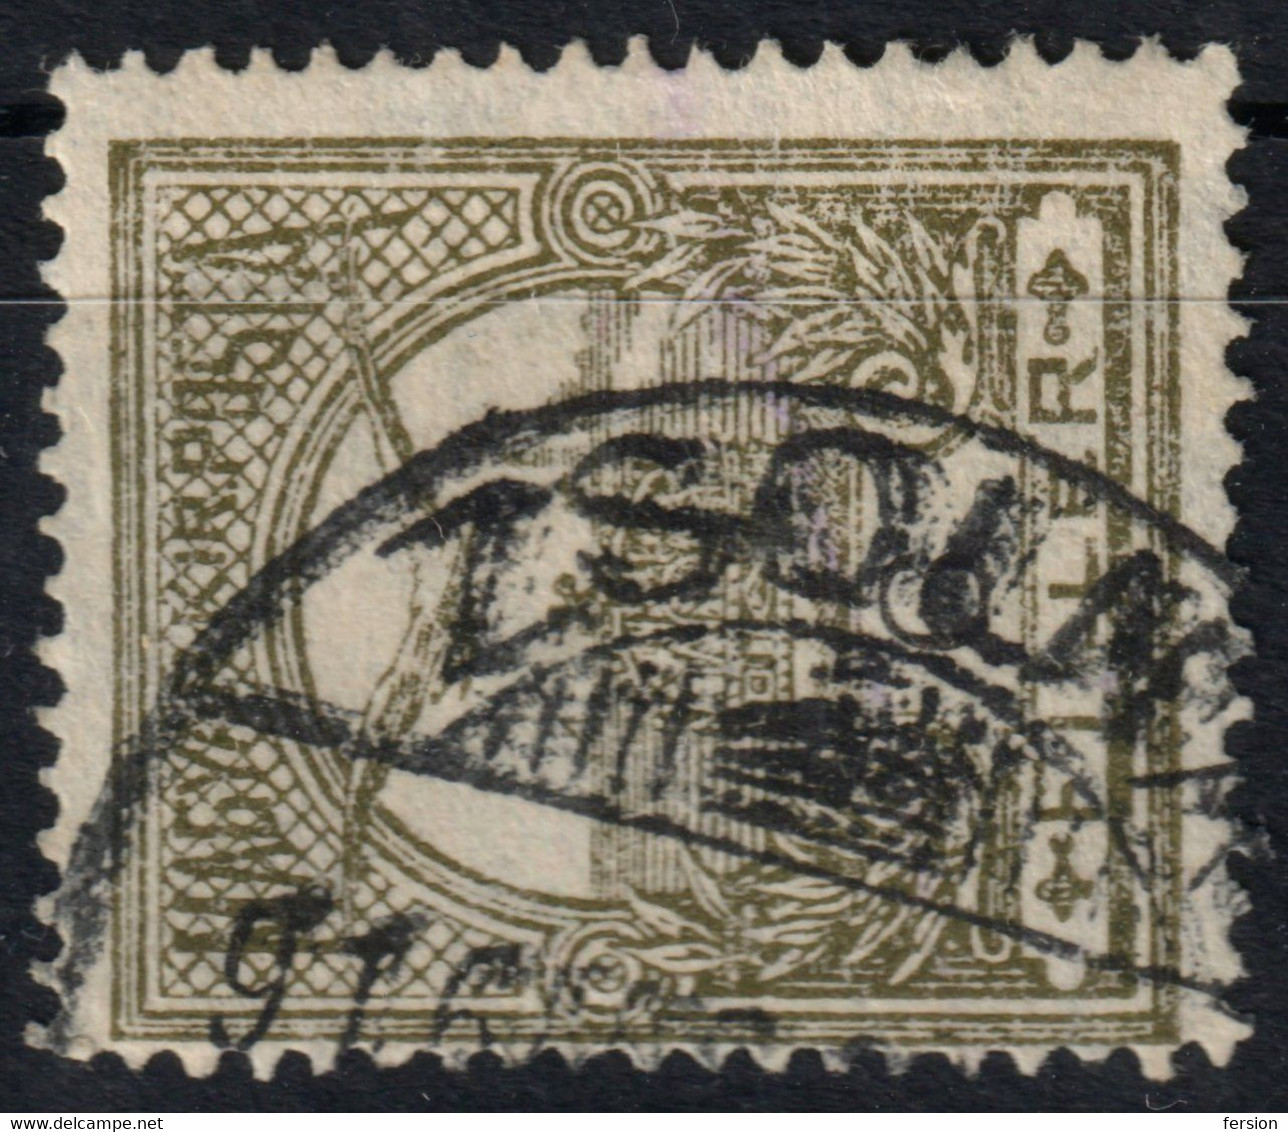 Žilina ZSOLNA Postmark TURUL Crown 1916 Hungary SLOVAKIA - Trencsén County - KuK K.u.K  6 Fill - ...-1918 Préphilatélie